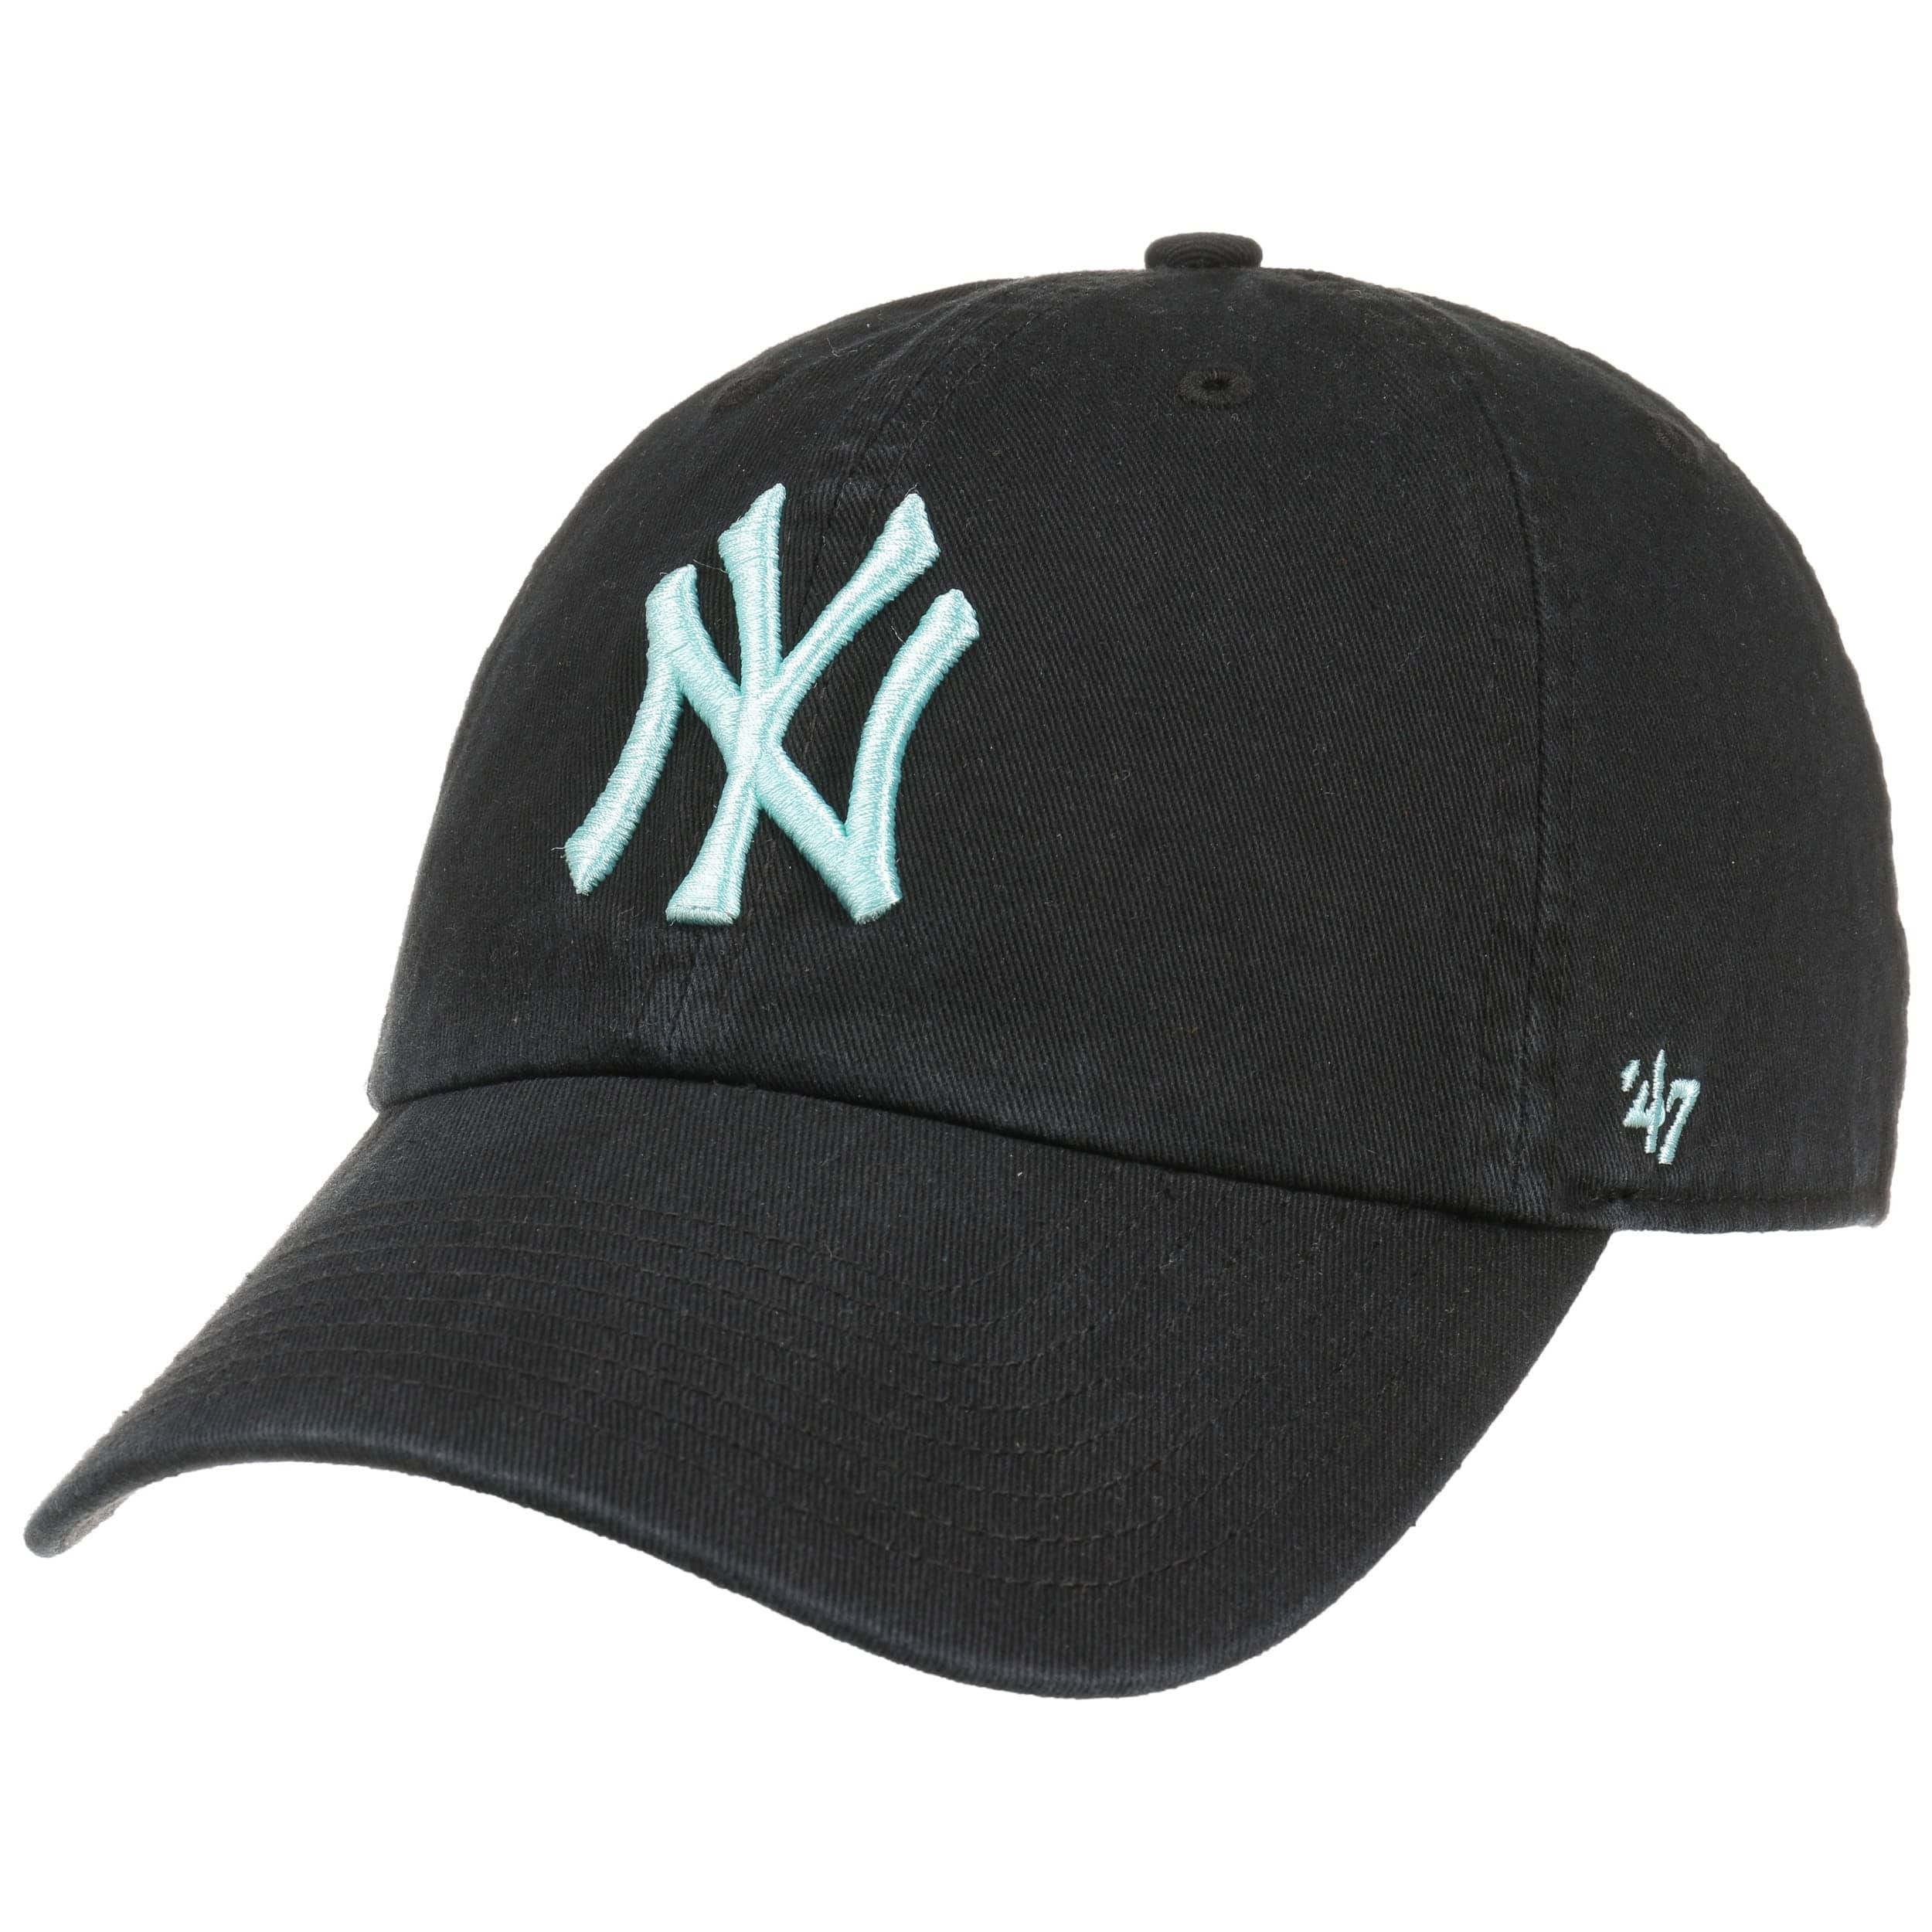 New York Yankees Adjustable 47 All-Star Black Hat